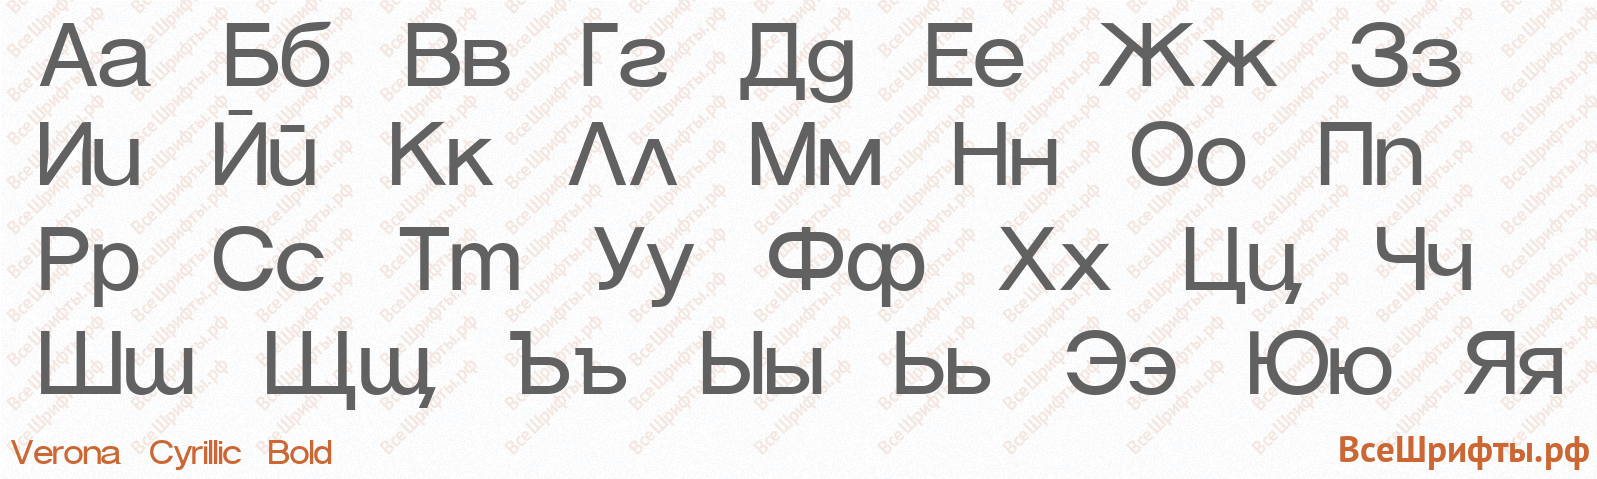 Шрифт Verona Cyrillic Bold с русскими буквами